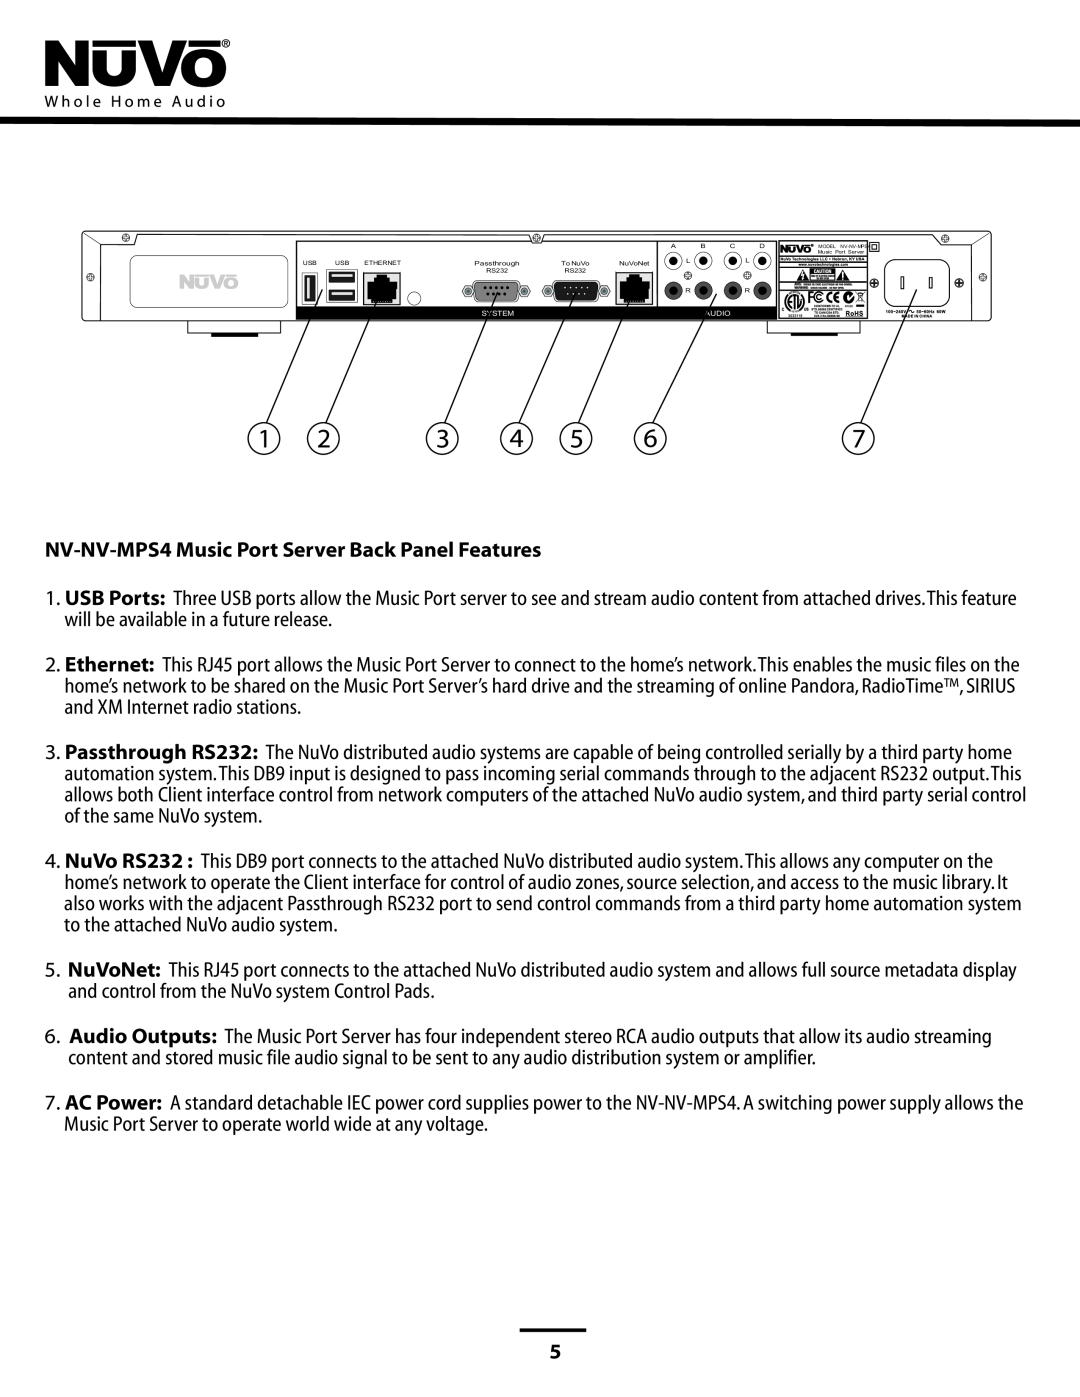 Nuvo manual NV-NV-MPS4 Music Port Server Back Panel Features, MODEL NV-NV-MPS4 